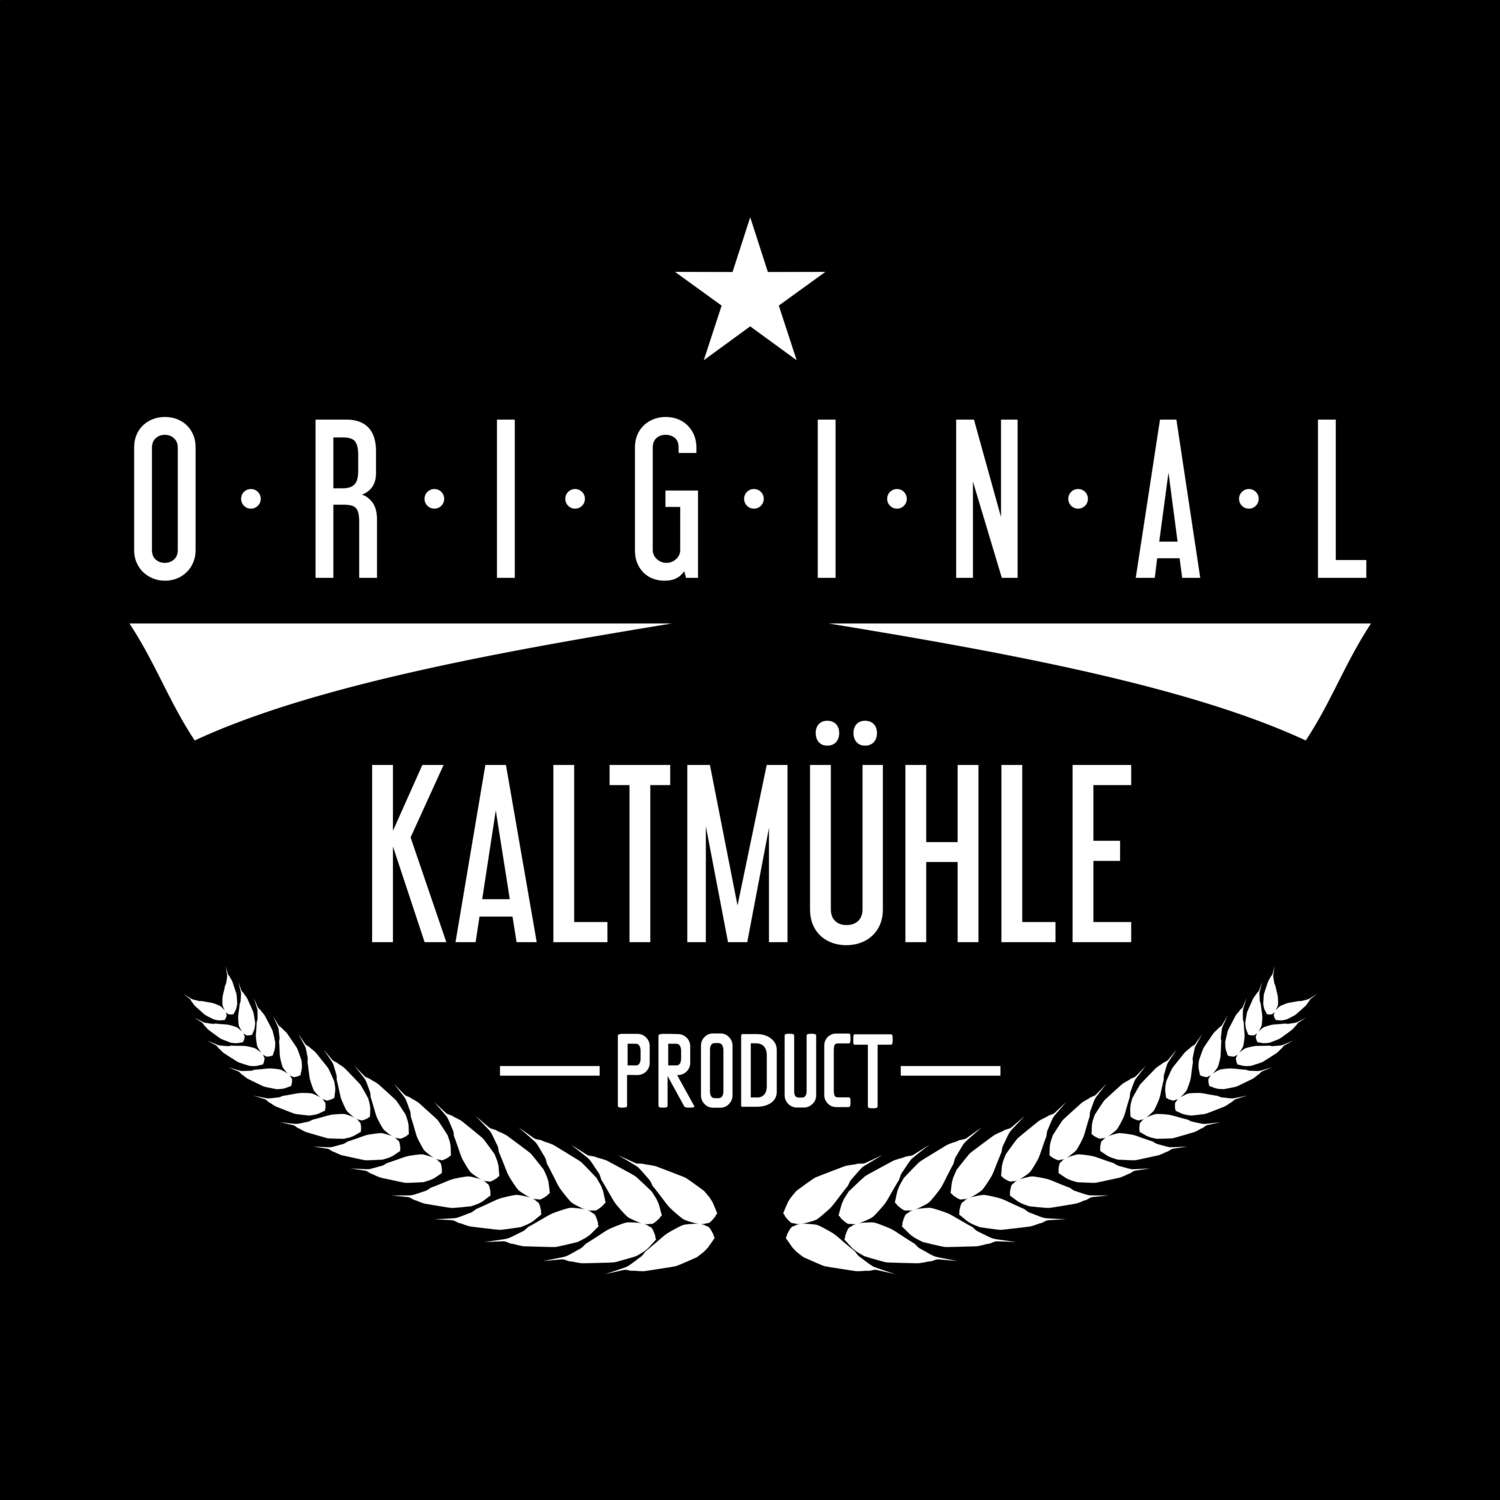 Kaltmühle T-Shirt »Original Product«